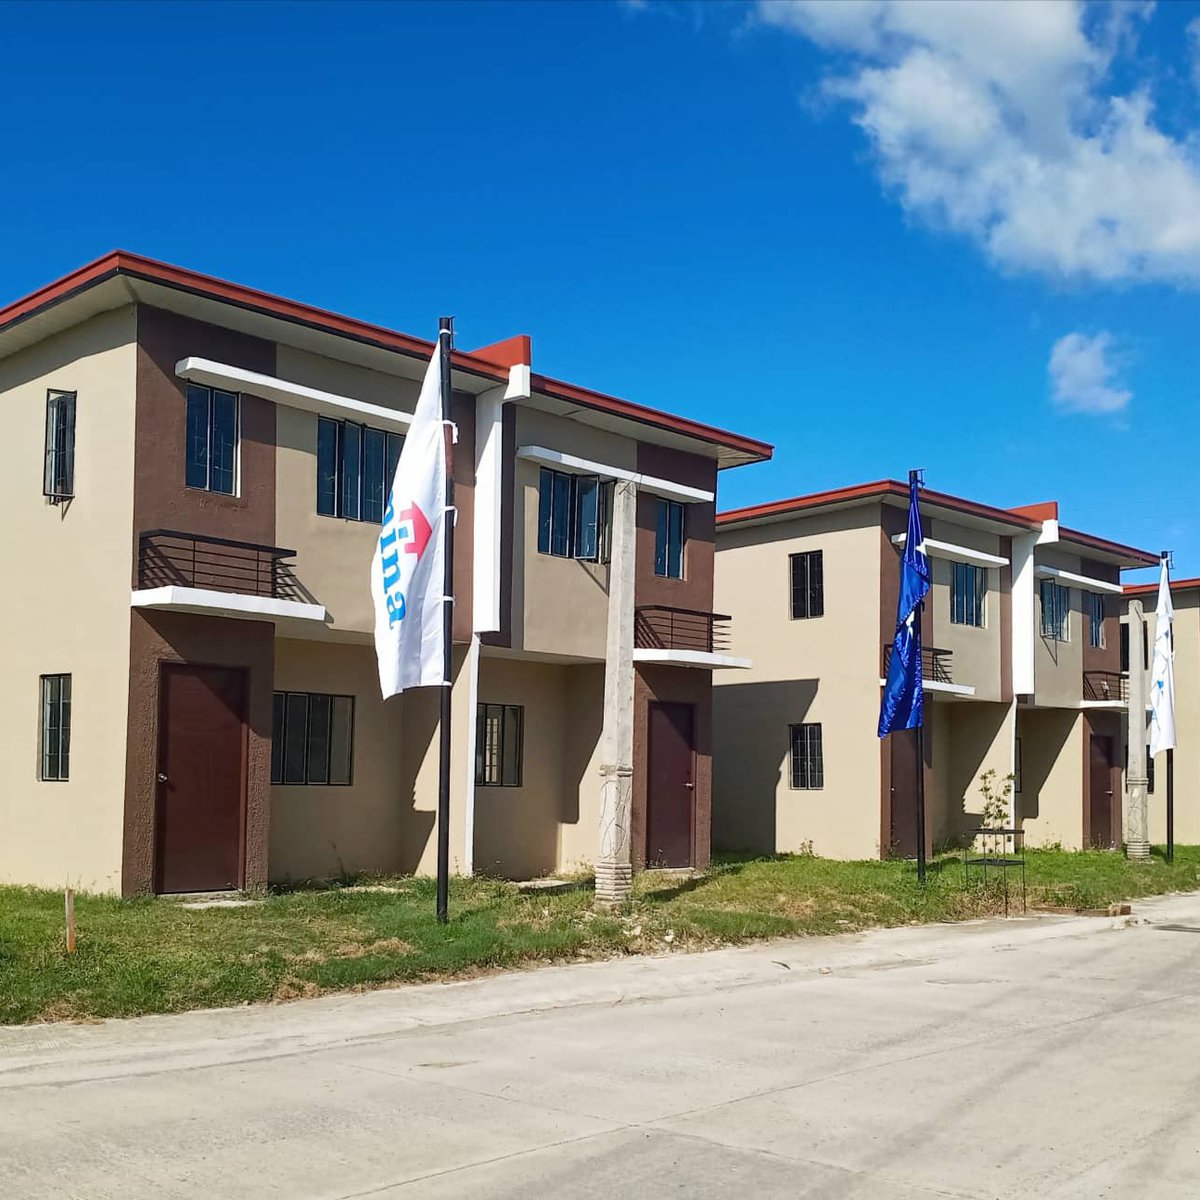 3-bedroom duplex twin house for sale in pagadian zamboanga del sur